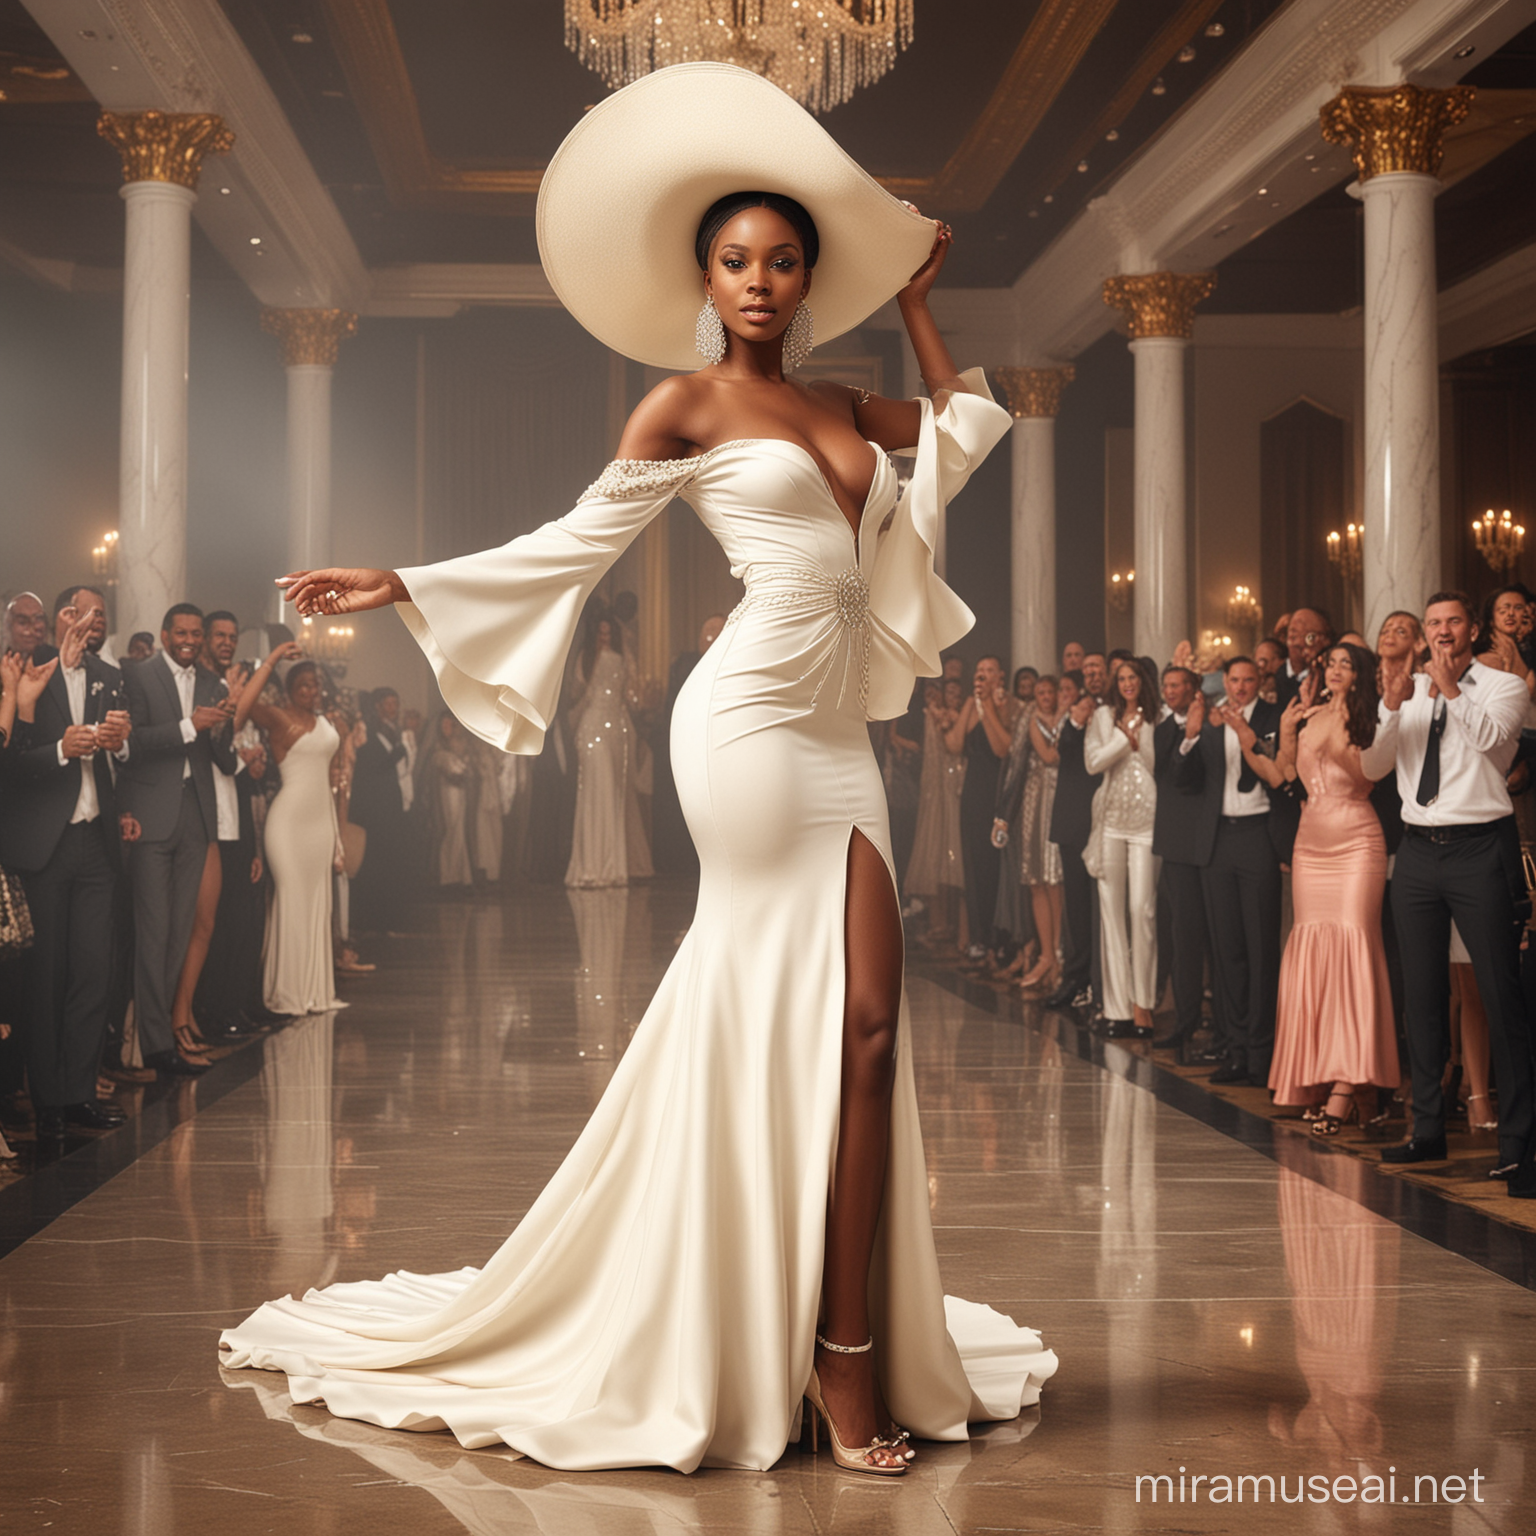 African Model Showcasing Extravagant Bridal Attire on Glamour Runway